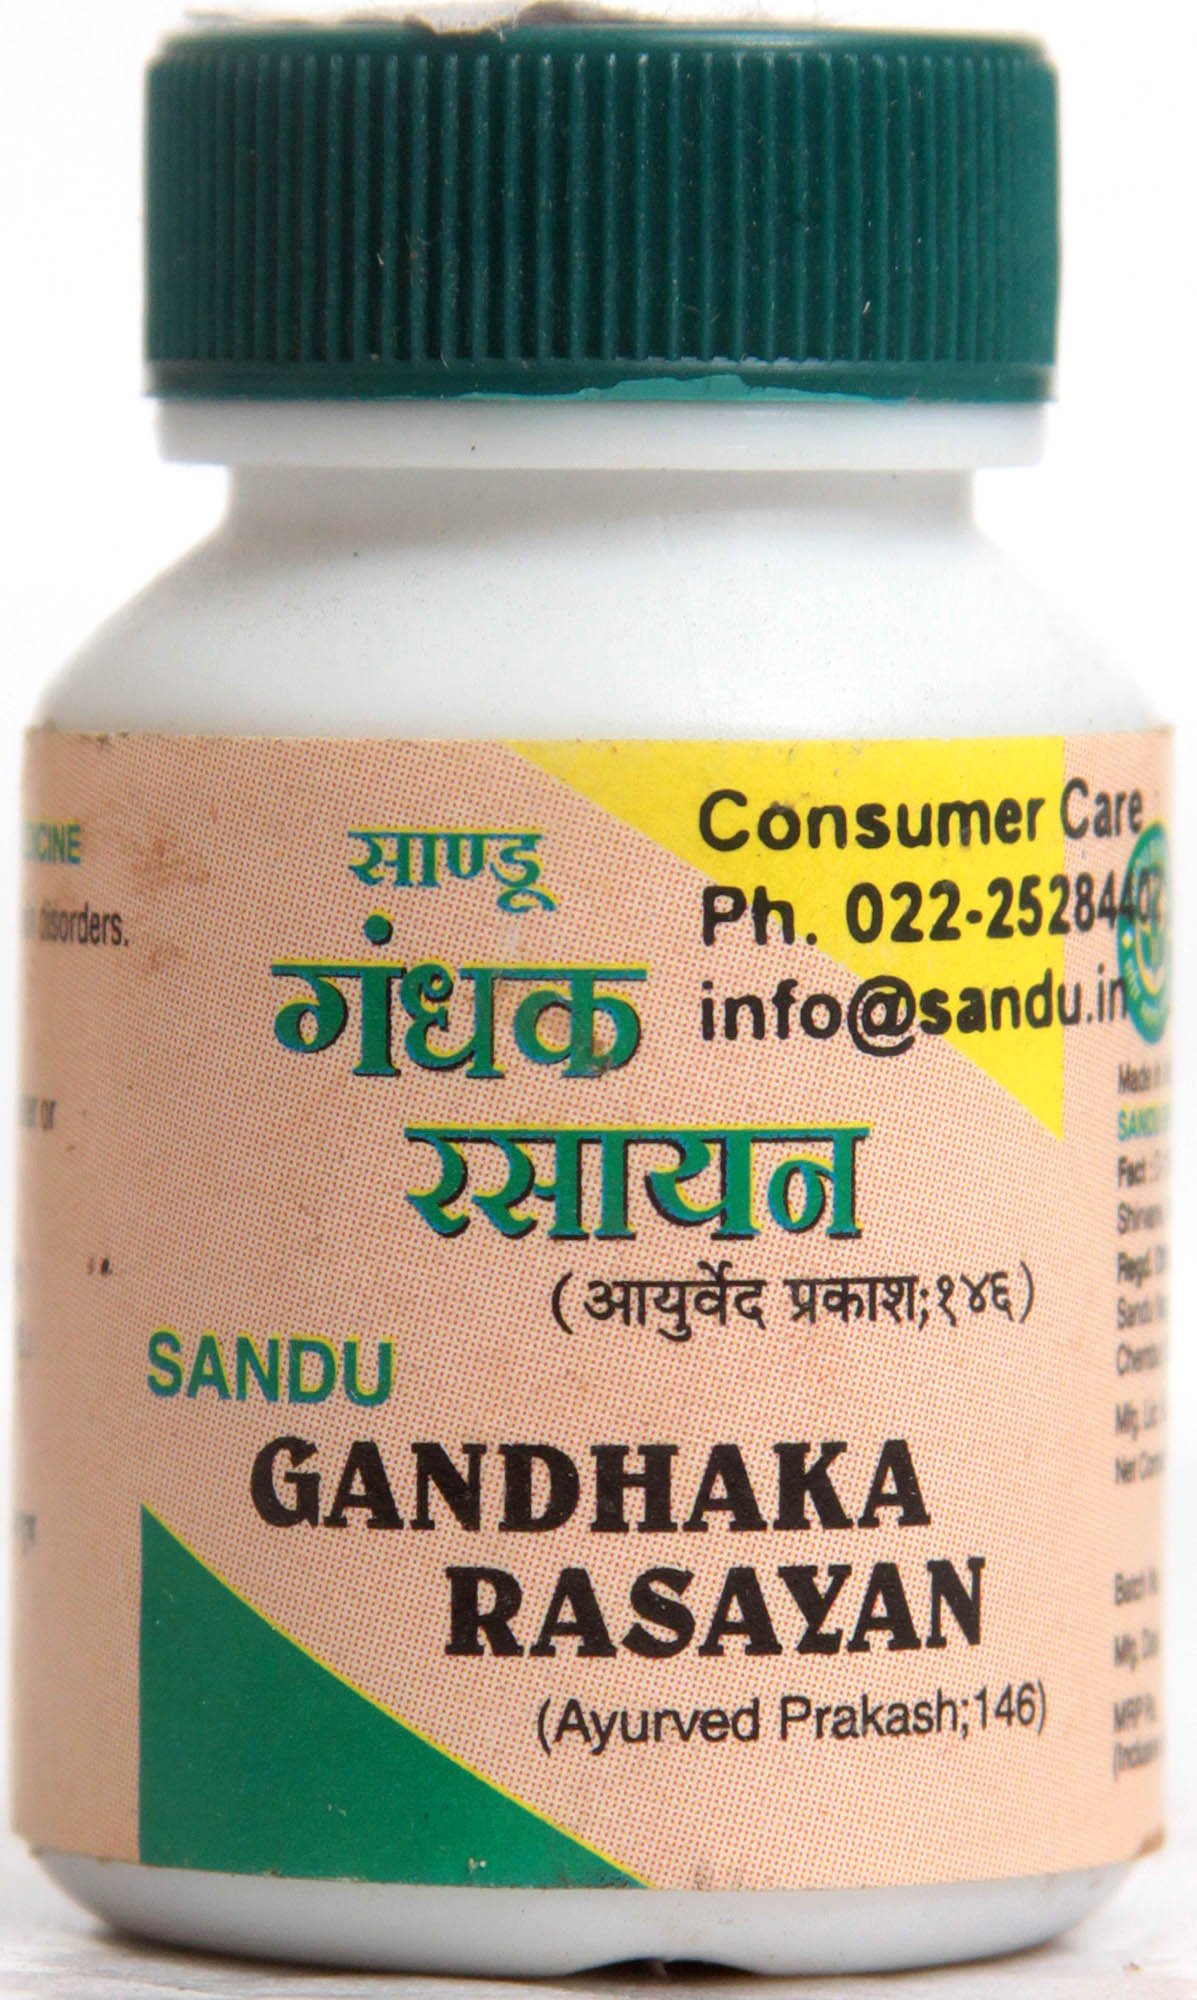 Gandhaka Rasayan - book cover